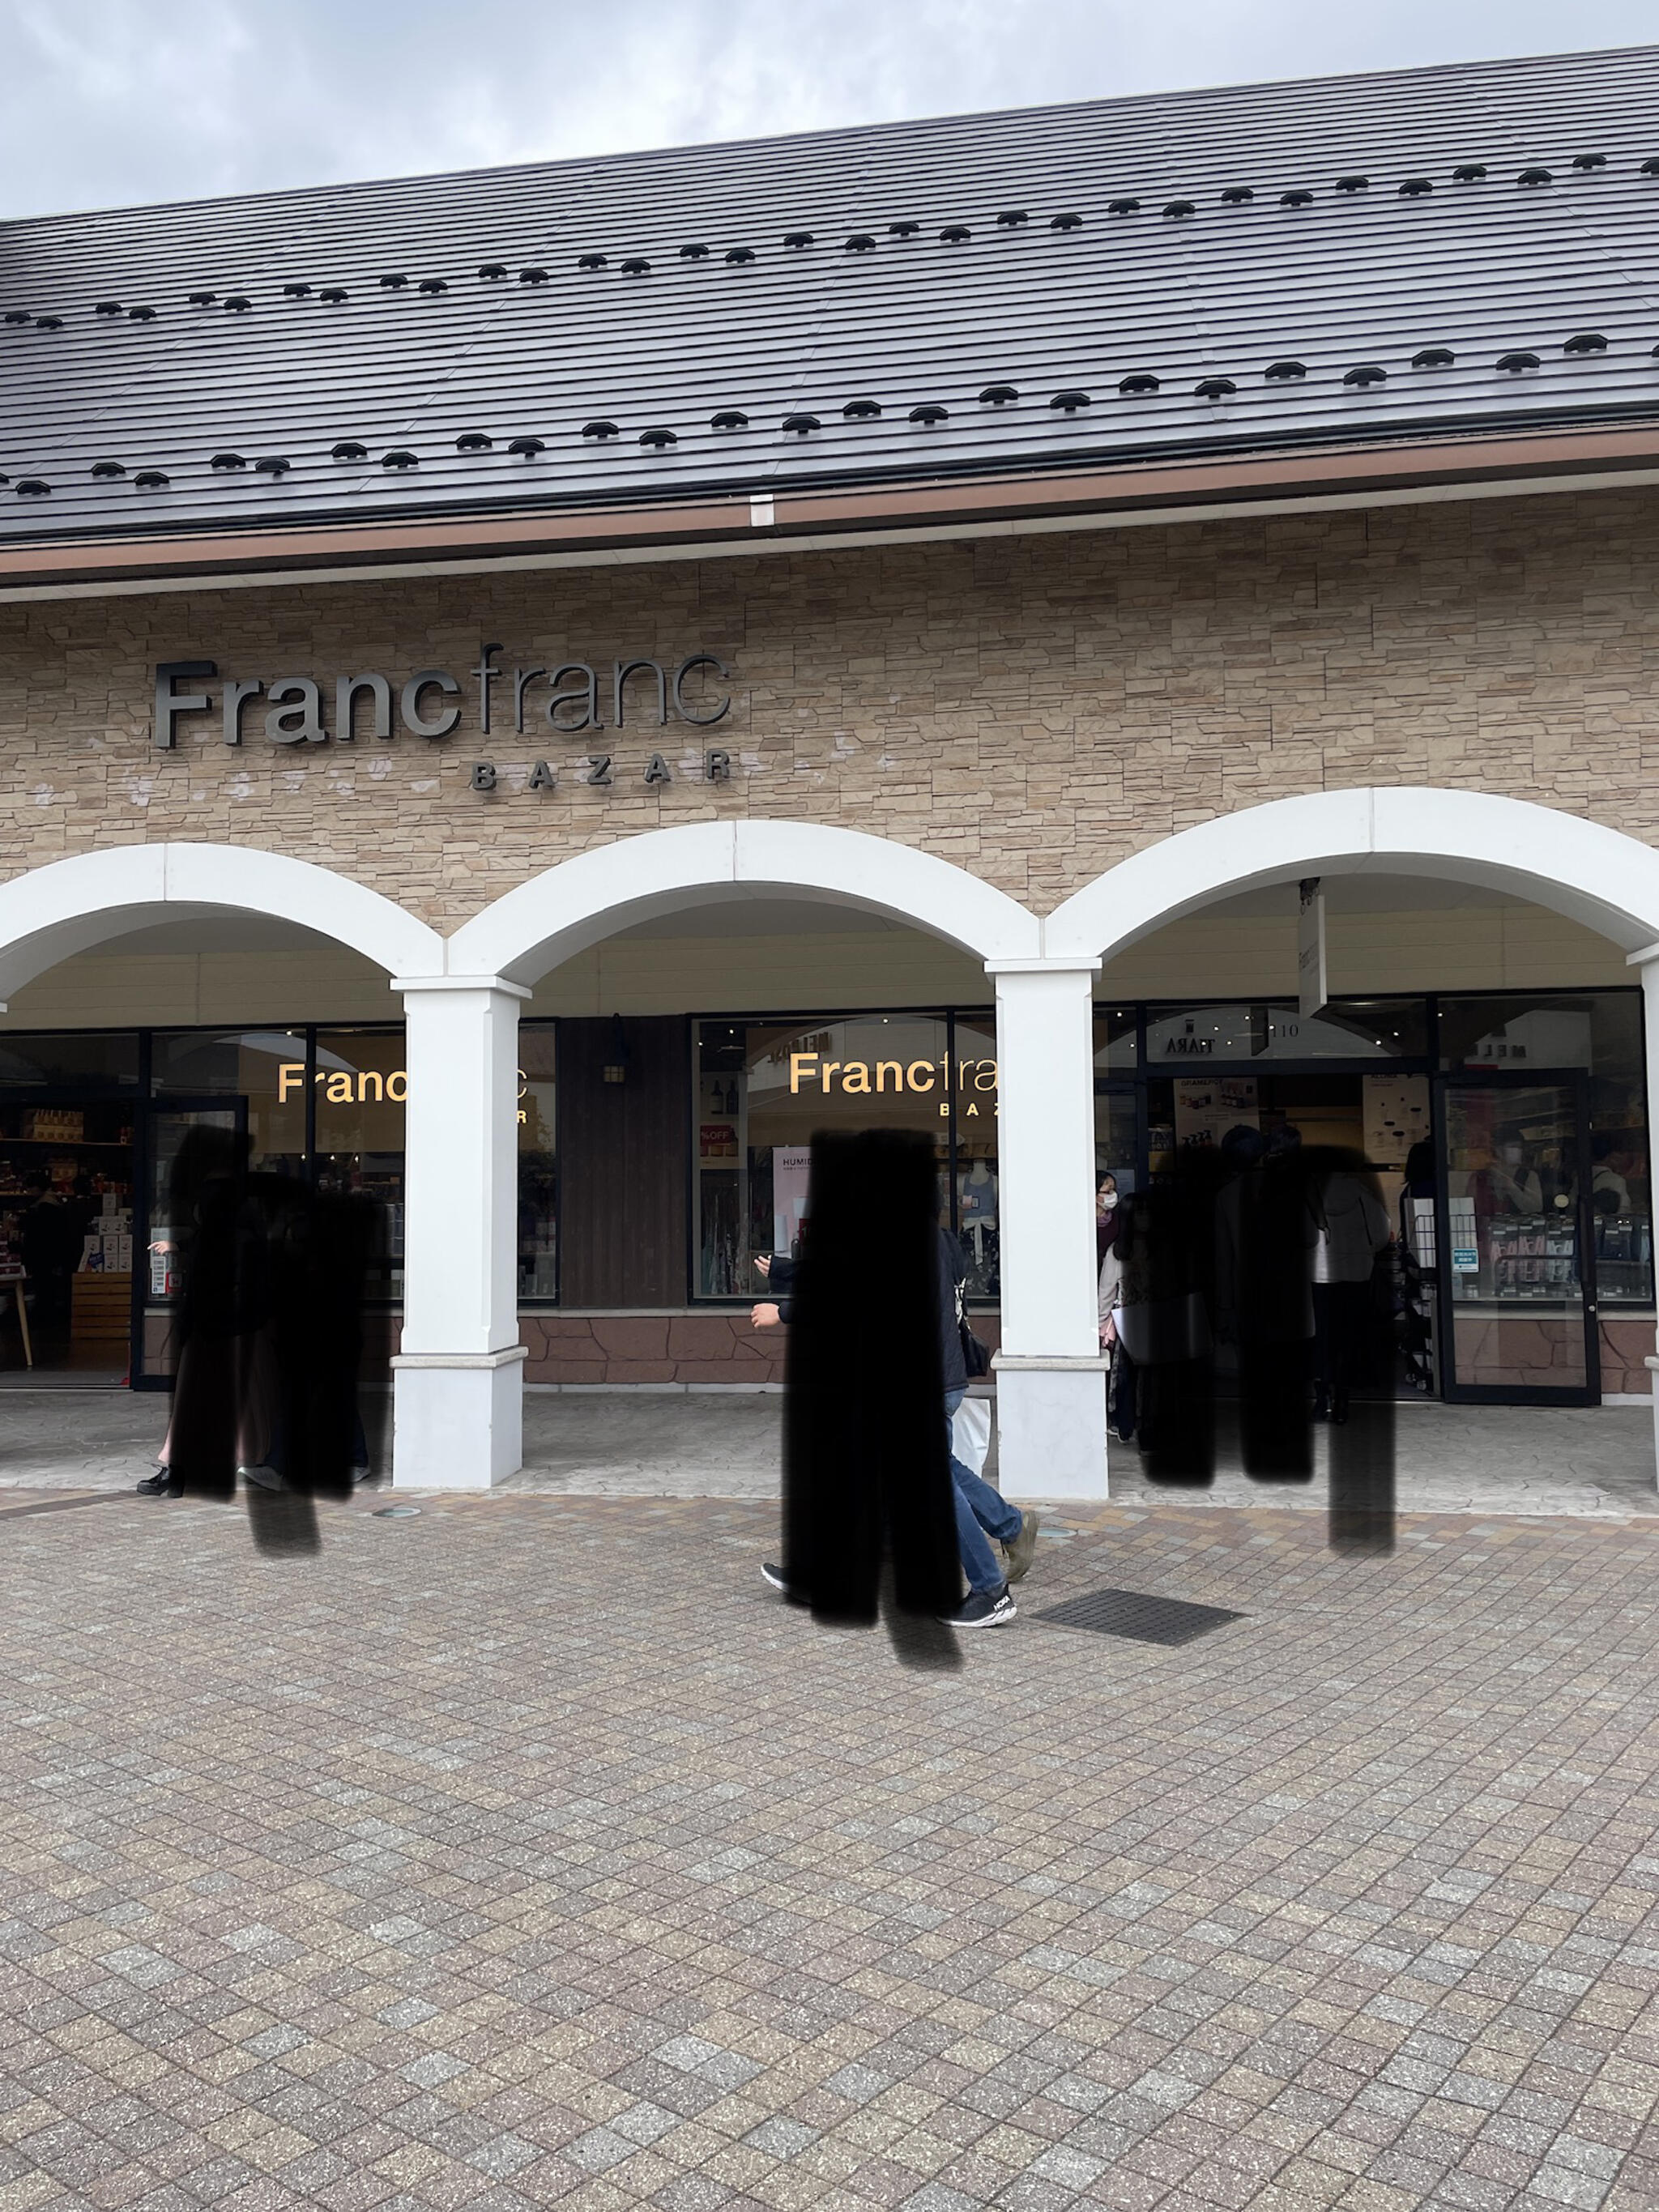 Francfranc 土岐プレミアム・アウトレット店の代表写真4